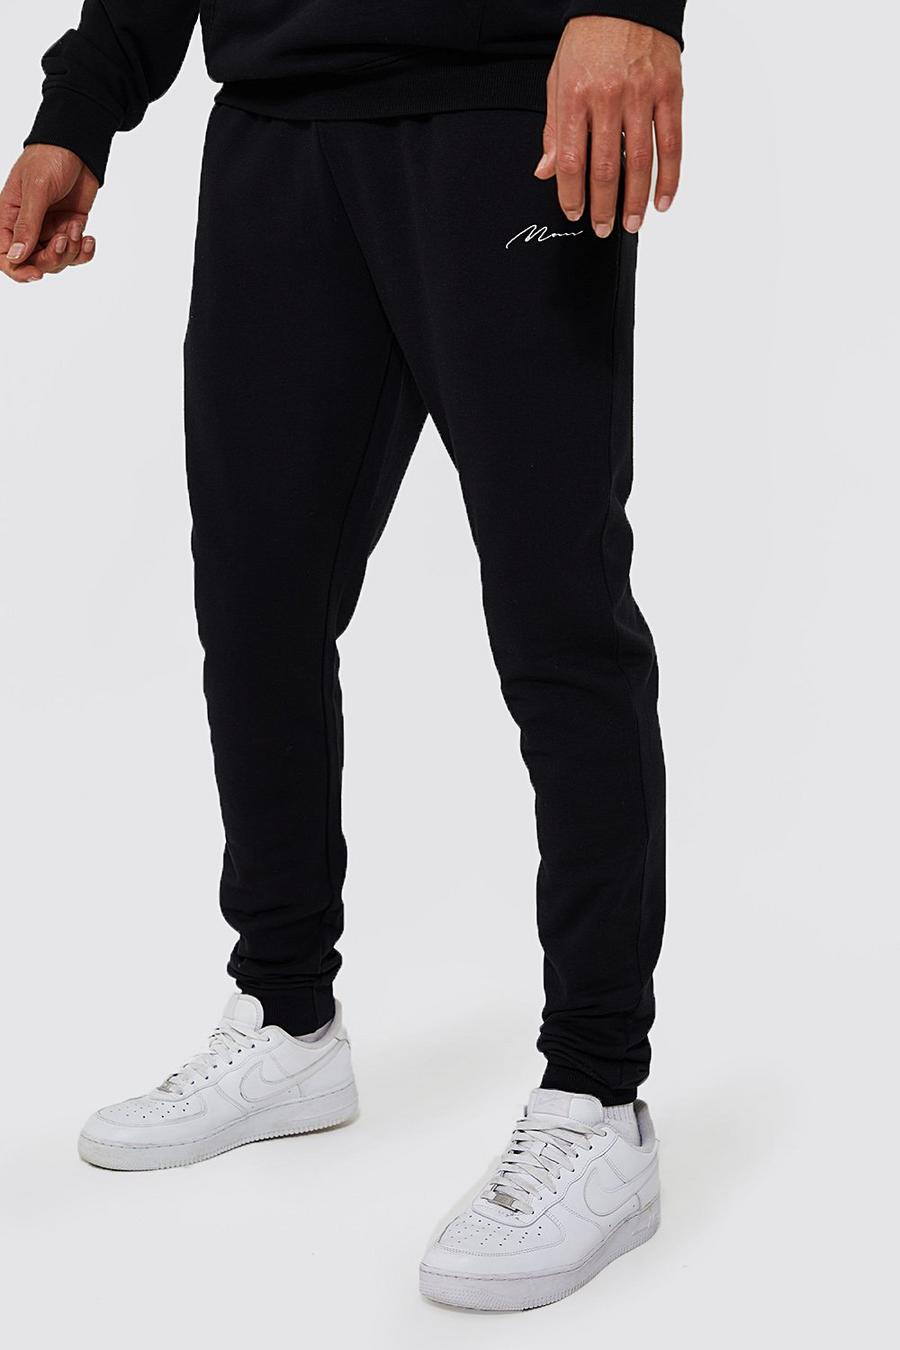 Black negro מכנסי ריצה סקיני מבד משולב בכותנת REEL עם כיתוב Man, לגברים גבוהים